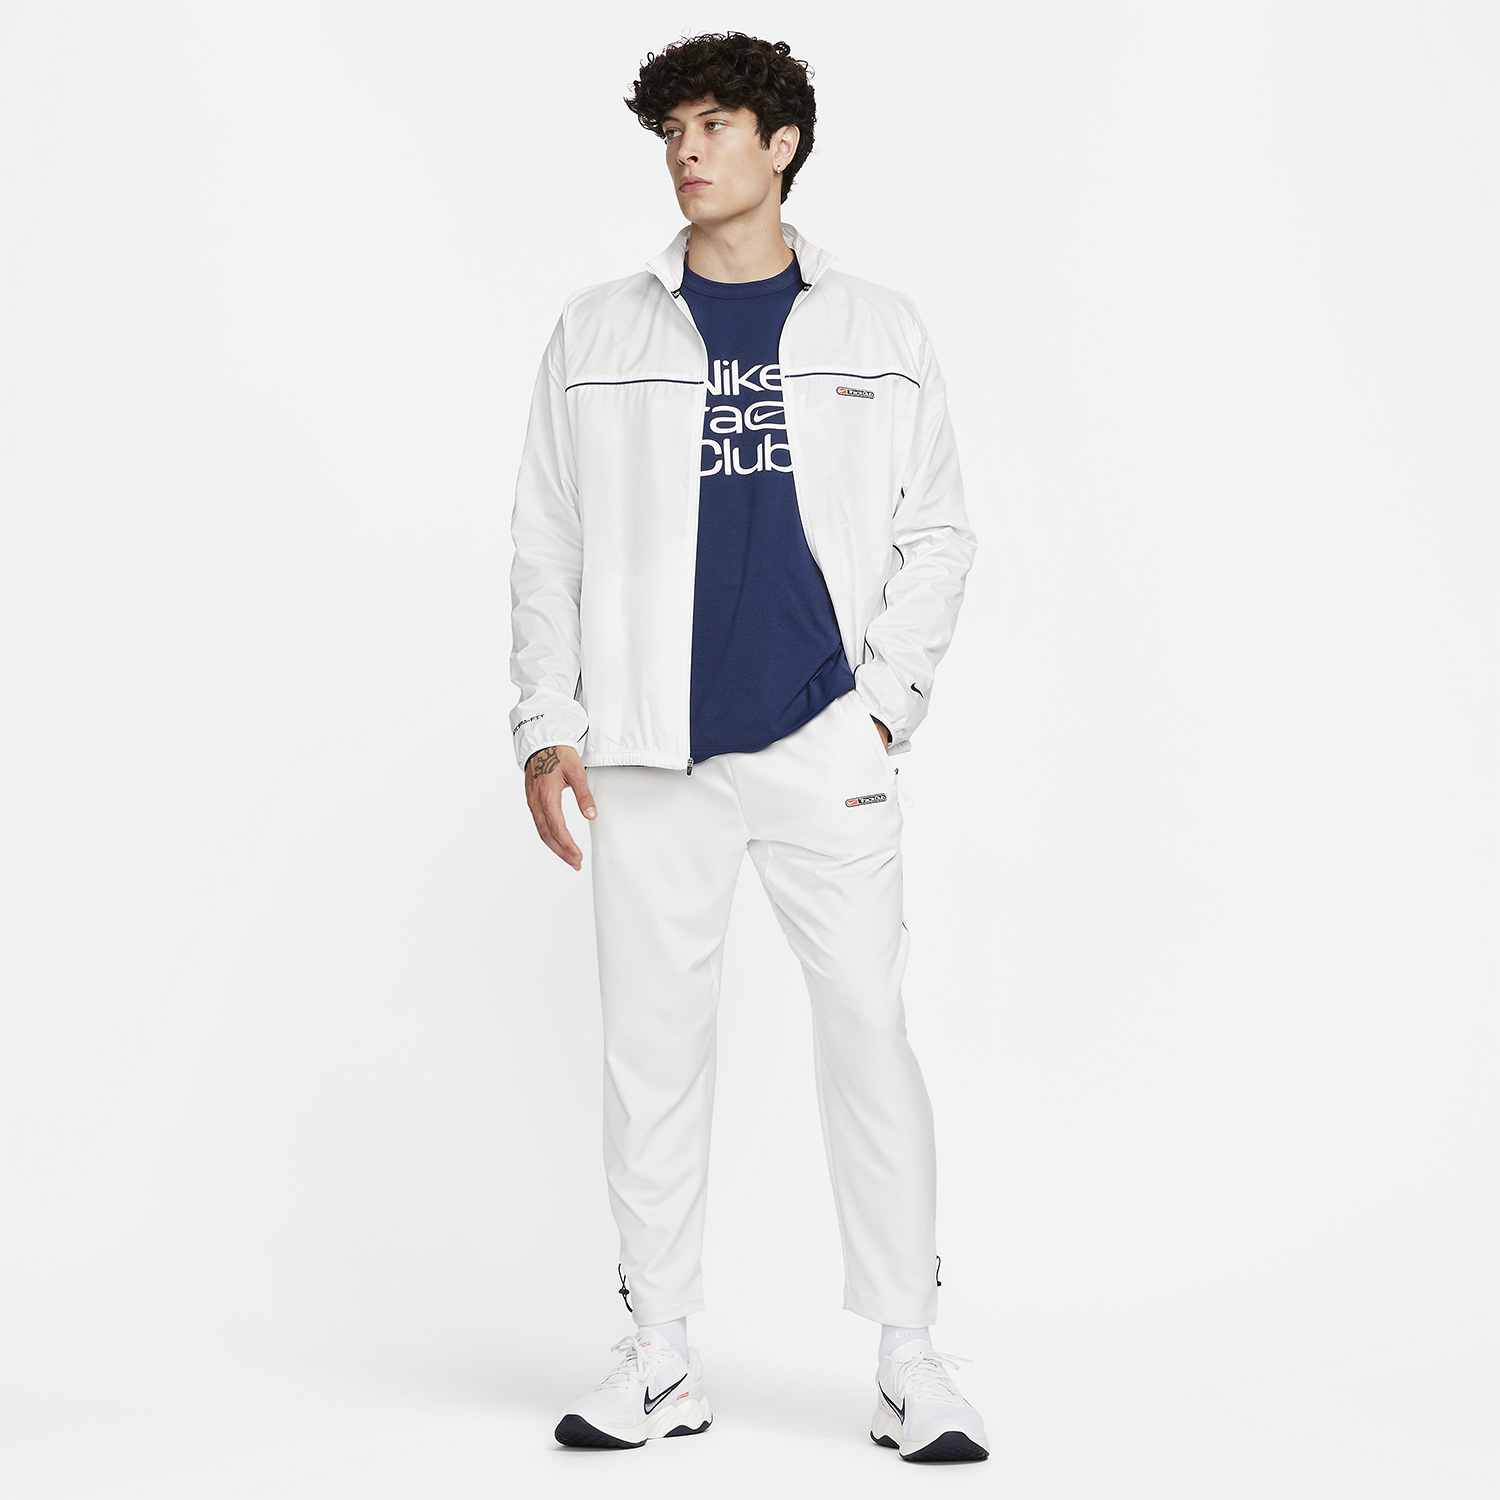 Nike Hyverse Track Club Camisa - Midnight Navy/Summit White